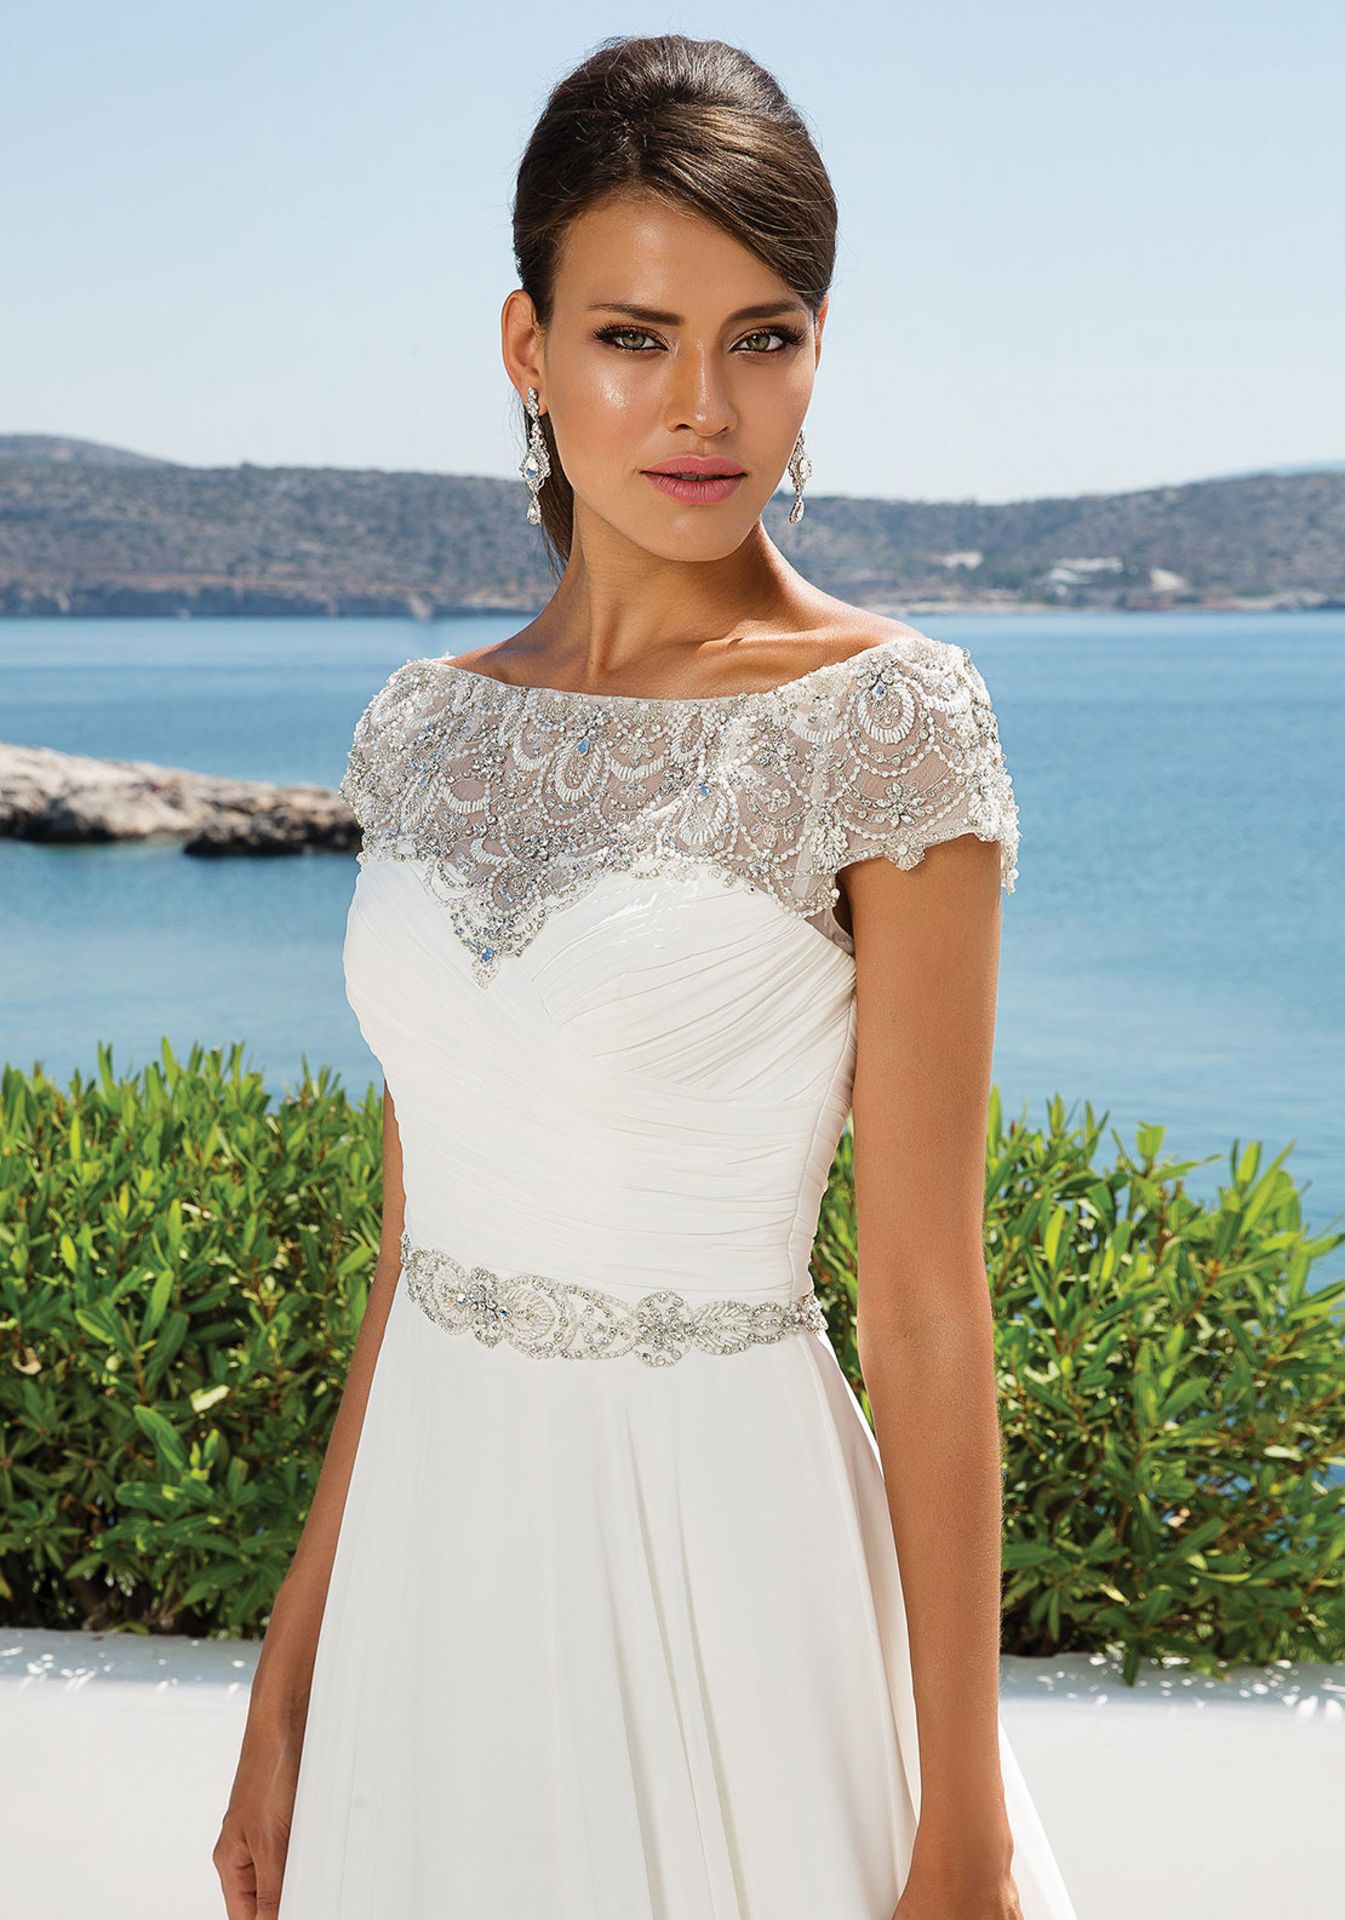 1 x Justin Alexander 'Aphrodite' Chiffon Bridal Gown - UK Size 16 - RRP £1,415 - Image 11 of 23